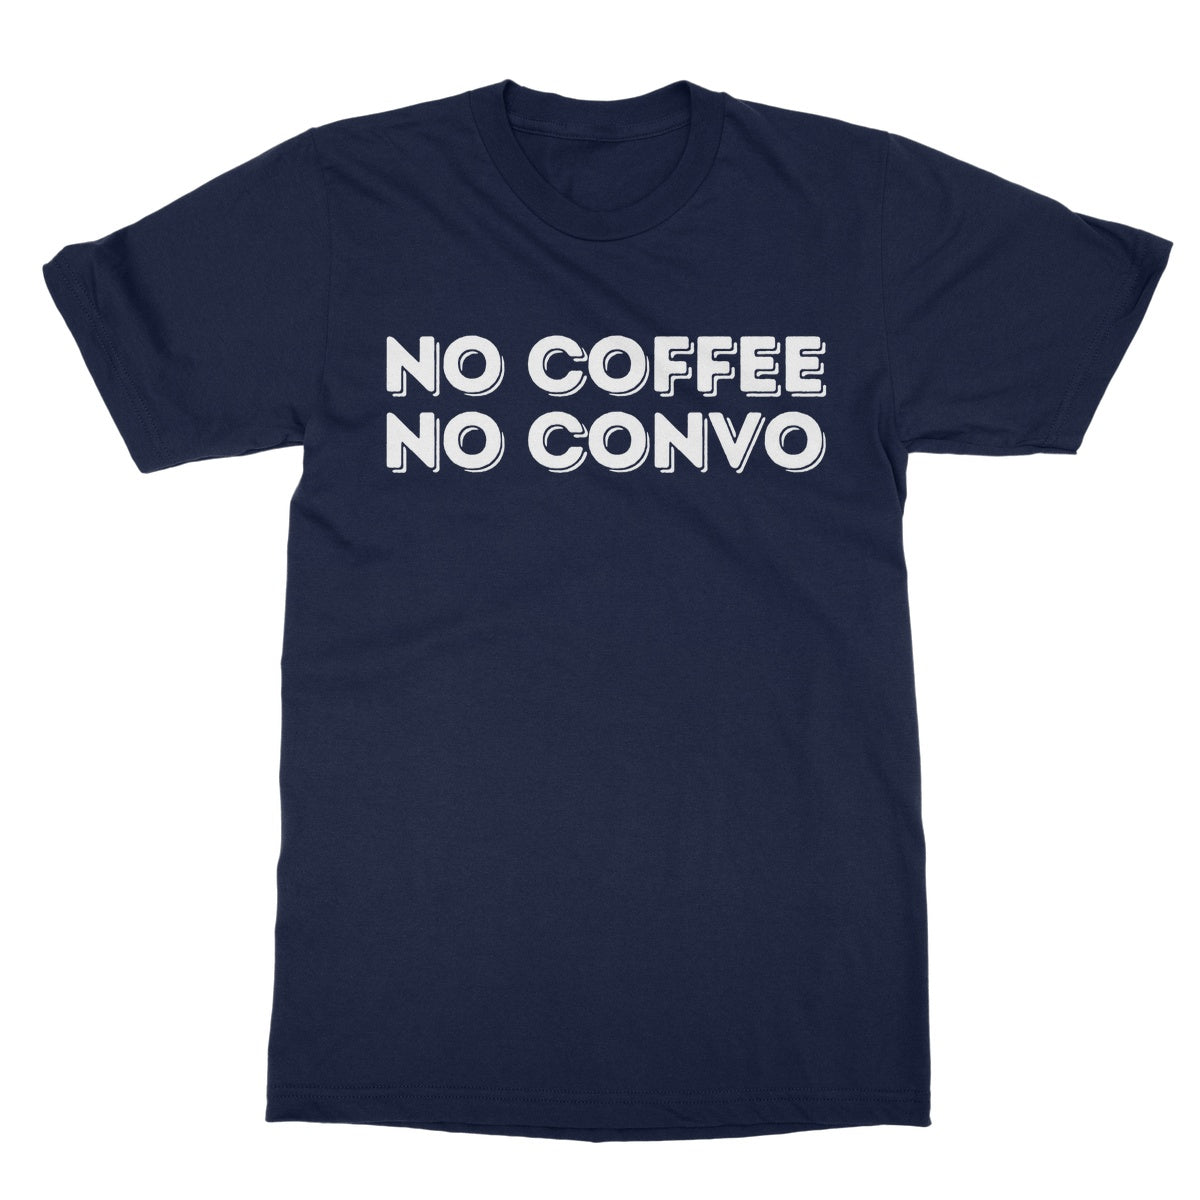 no coffee no convo t shirt navy